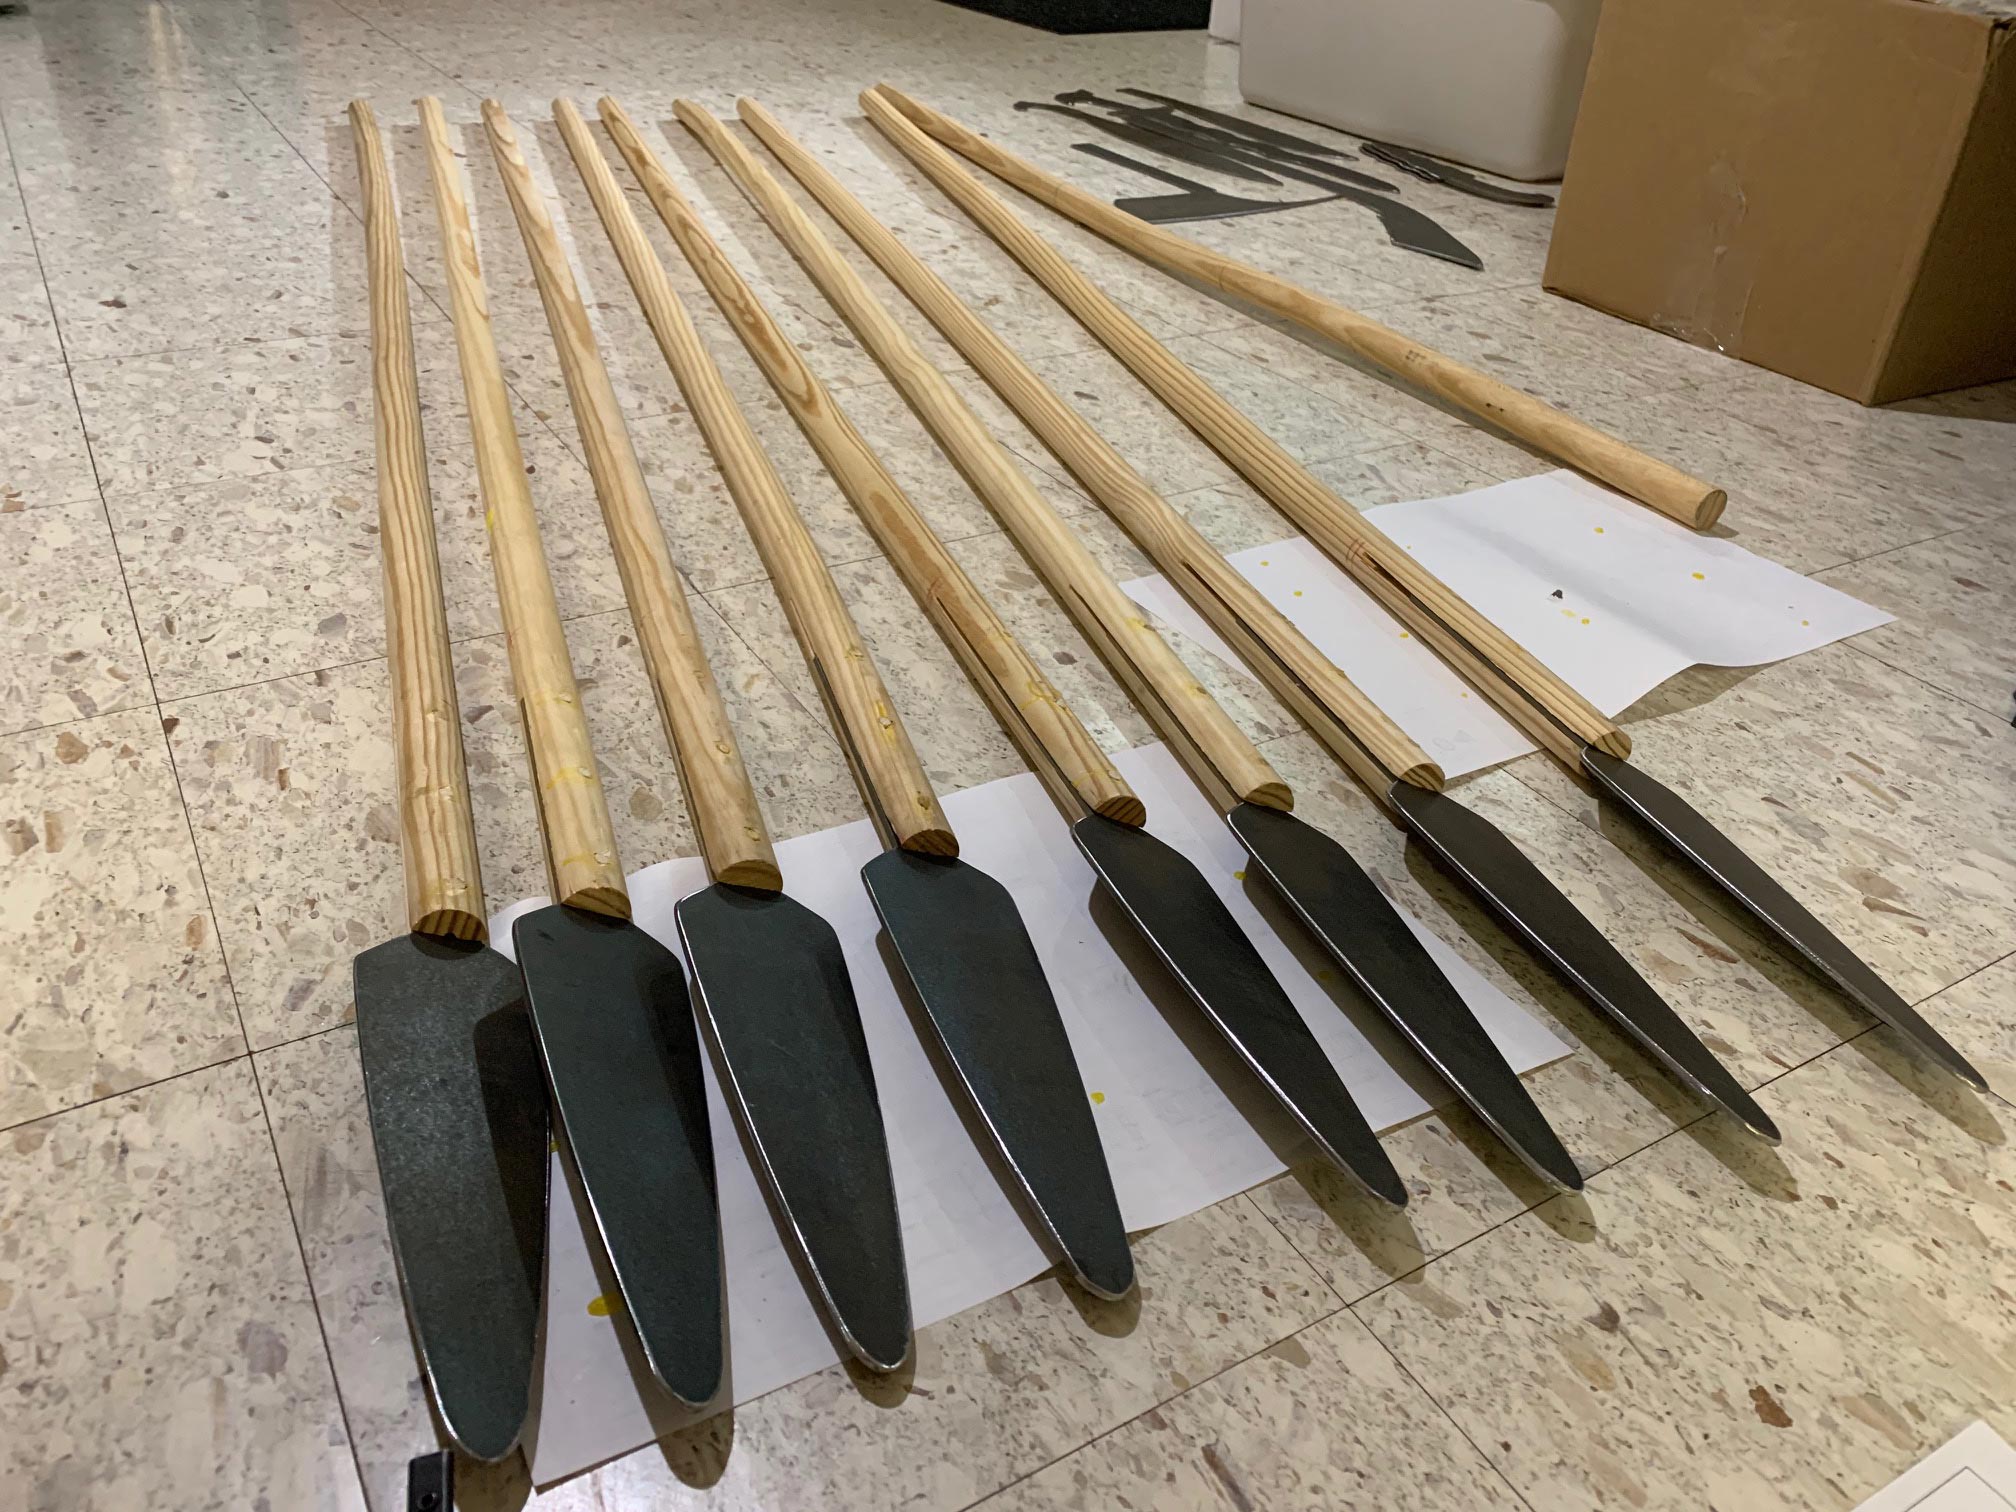 Wood spears near complete